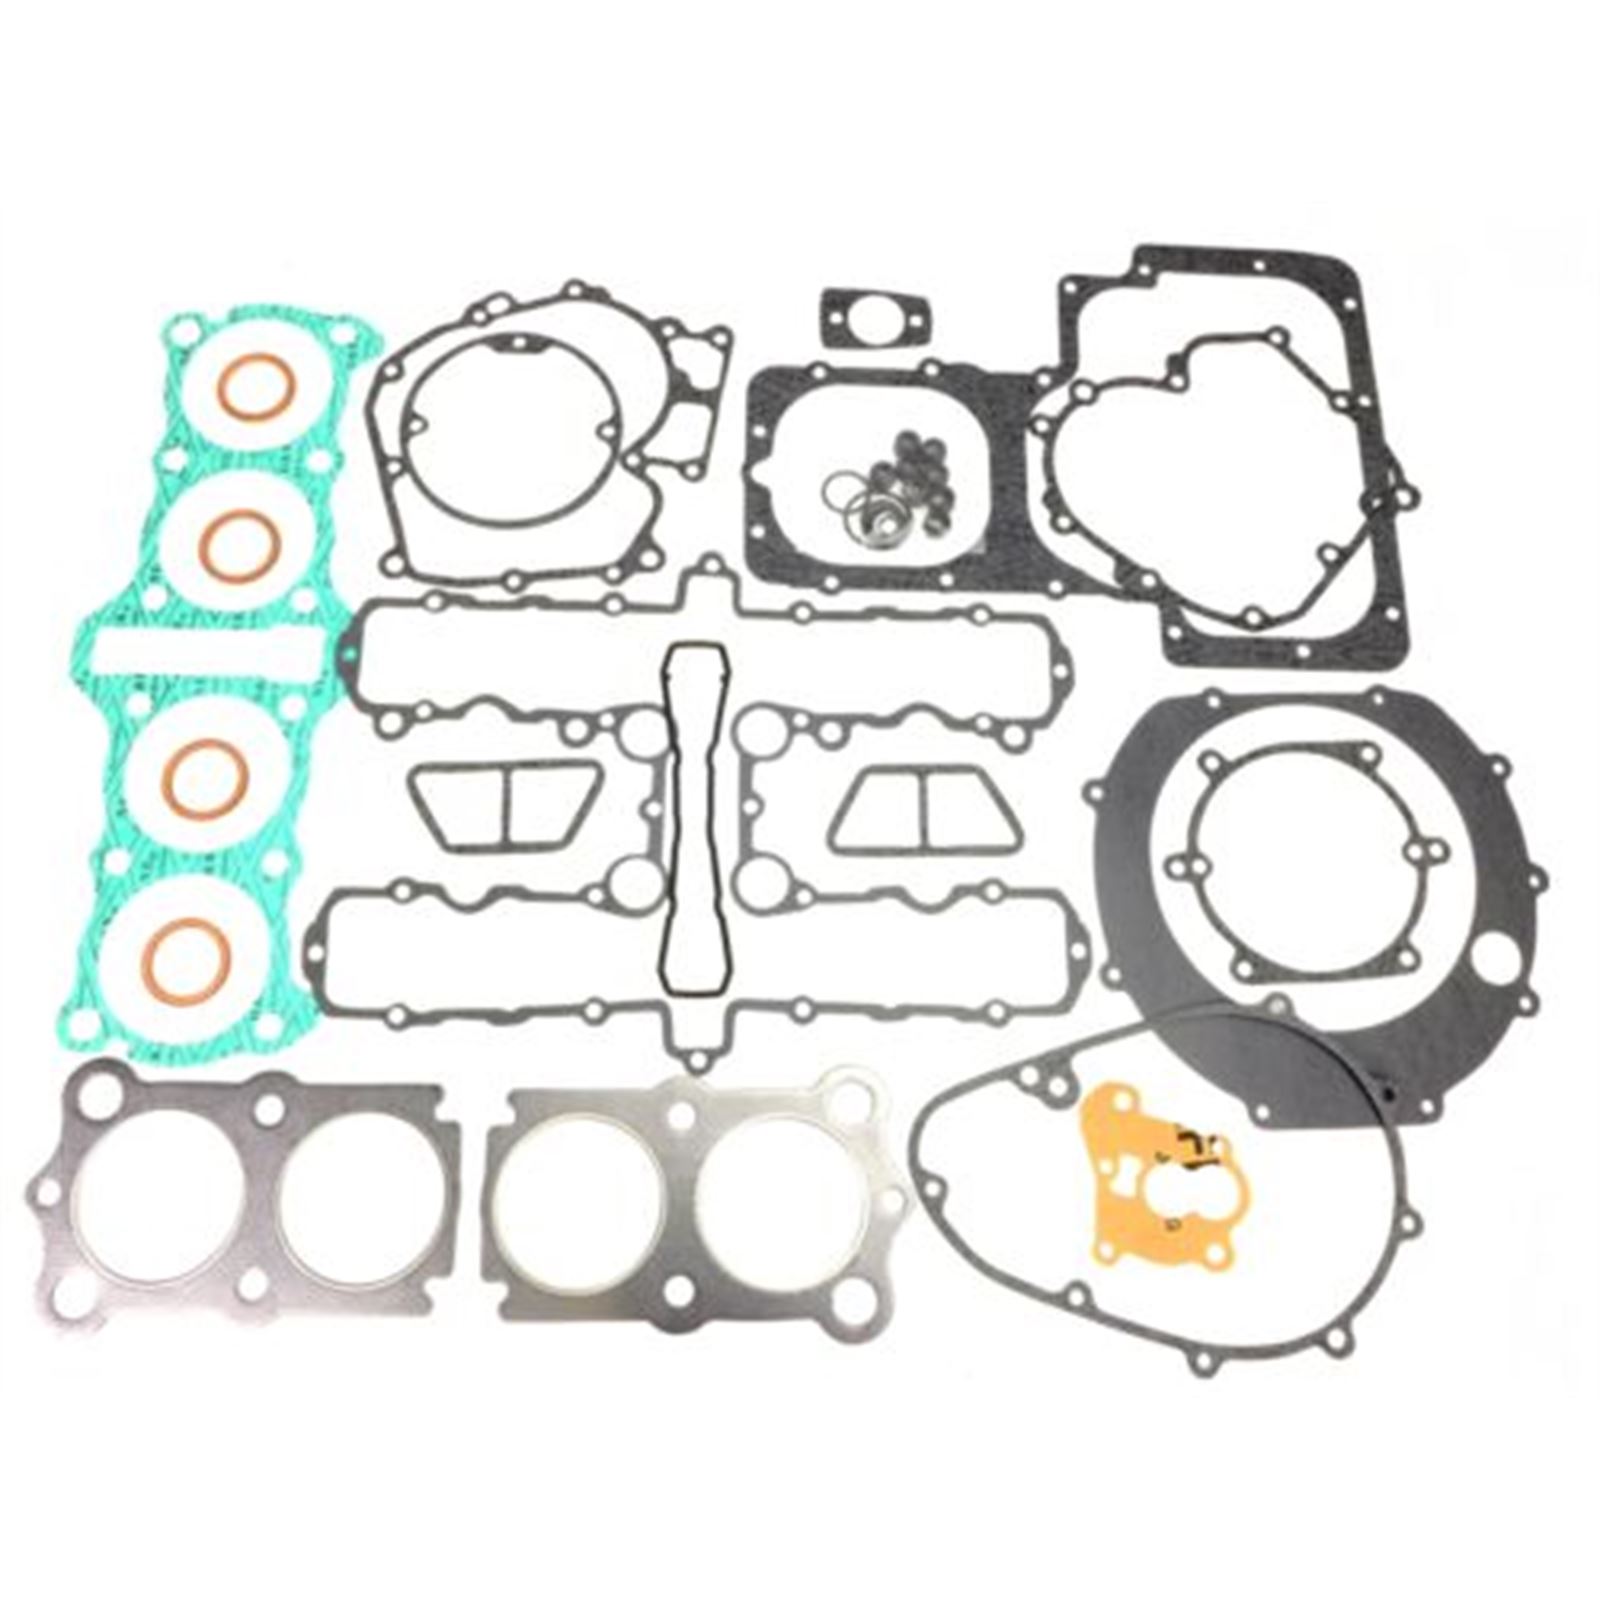 2FastMoto Complete Engine Rebuild Gasket Kit for Kawasaki KZ1000 79-81 VG438